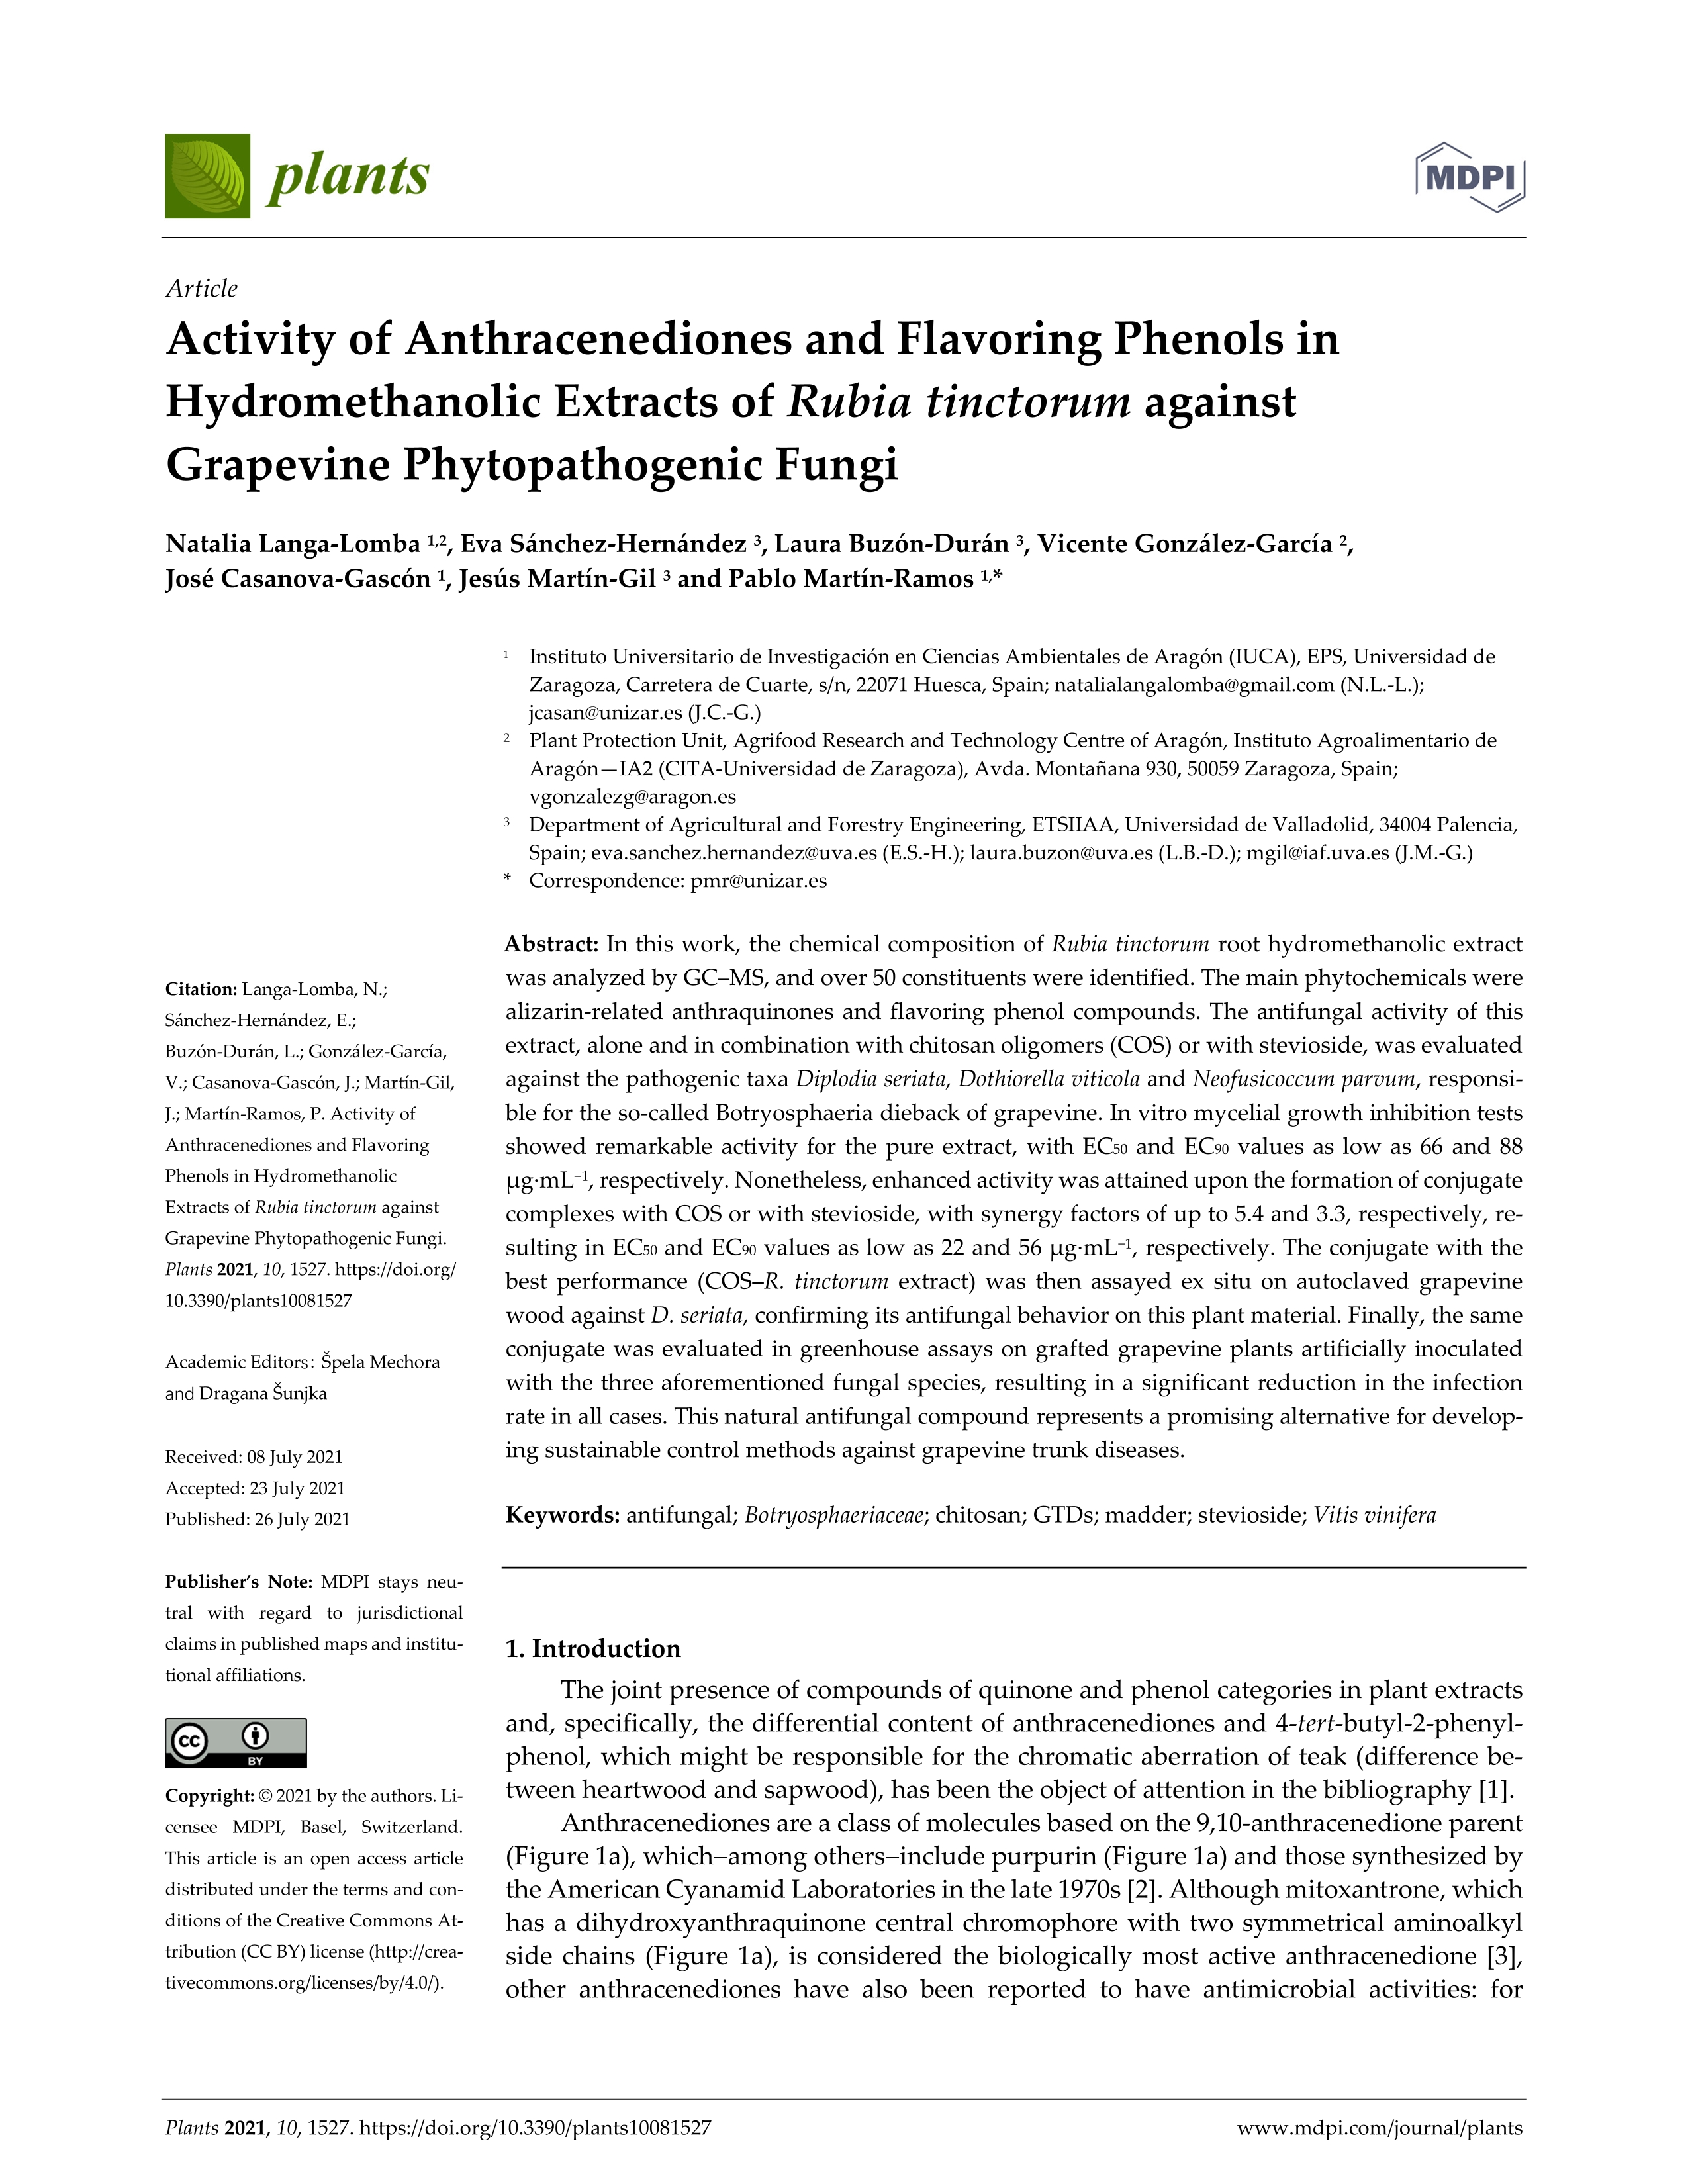 Activity of anthracenediones and flavoring phenols in hydromethanolic extracts of Rubia tinctorum against grapevine phytopathogenic fungi